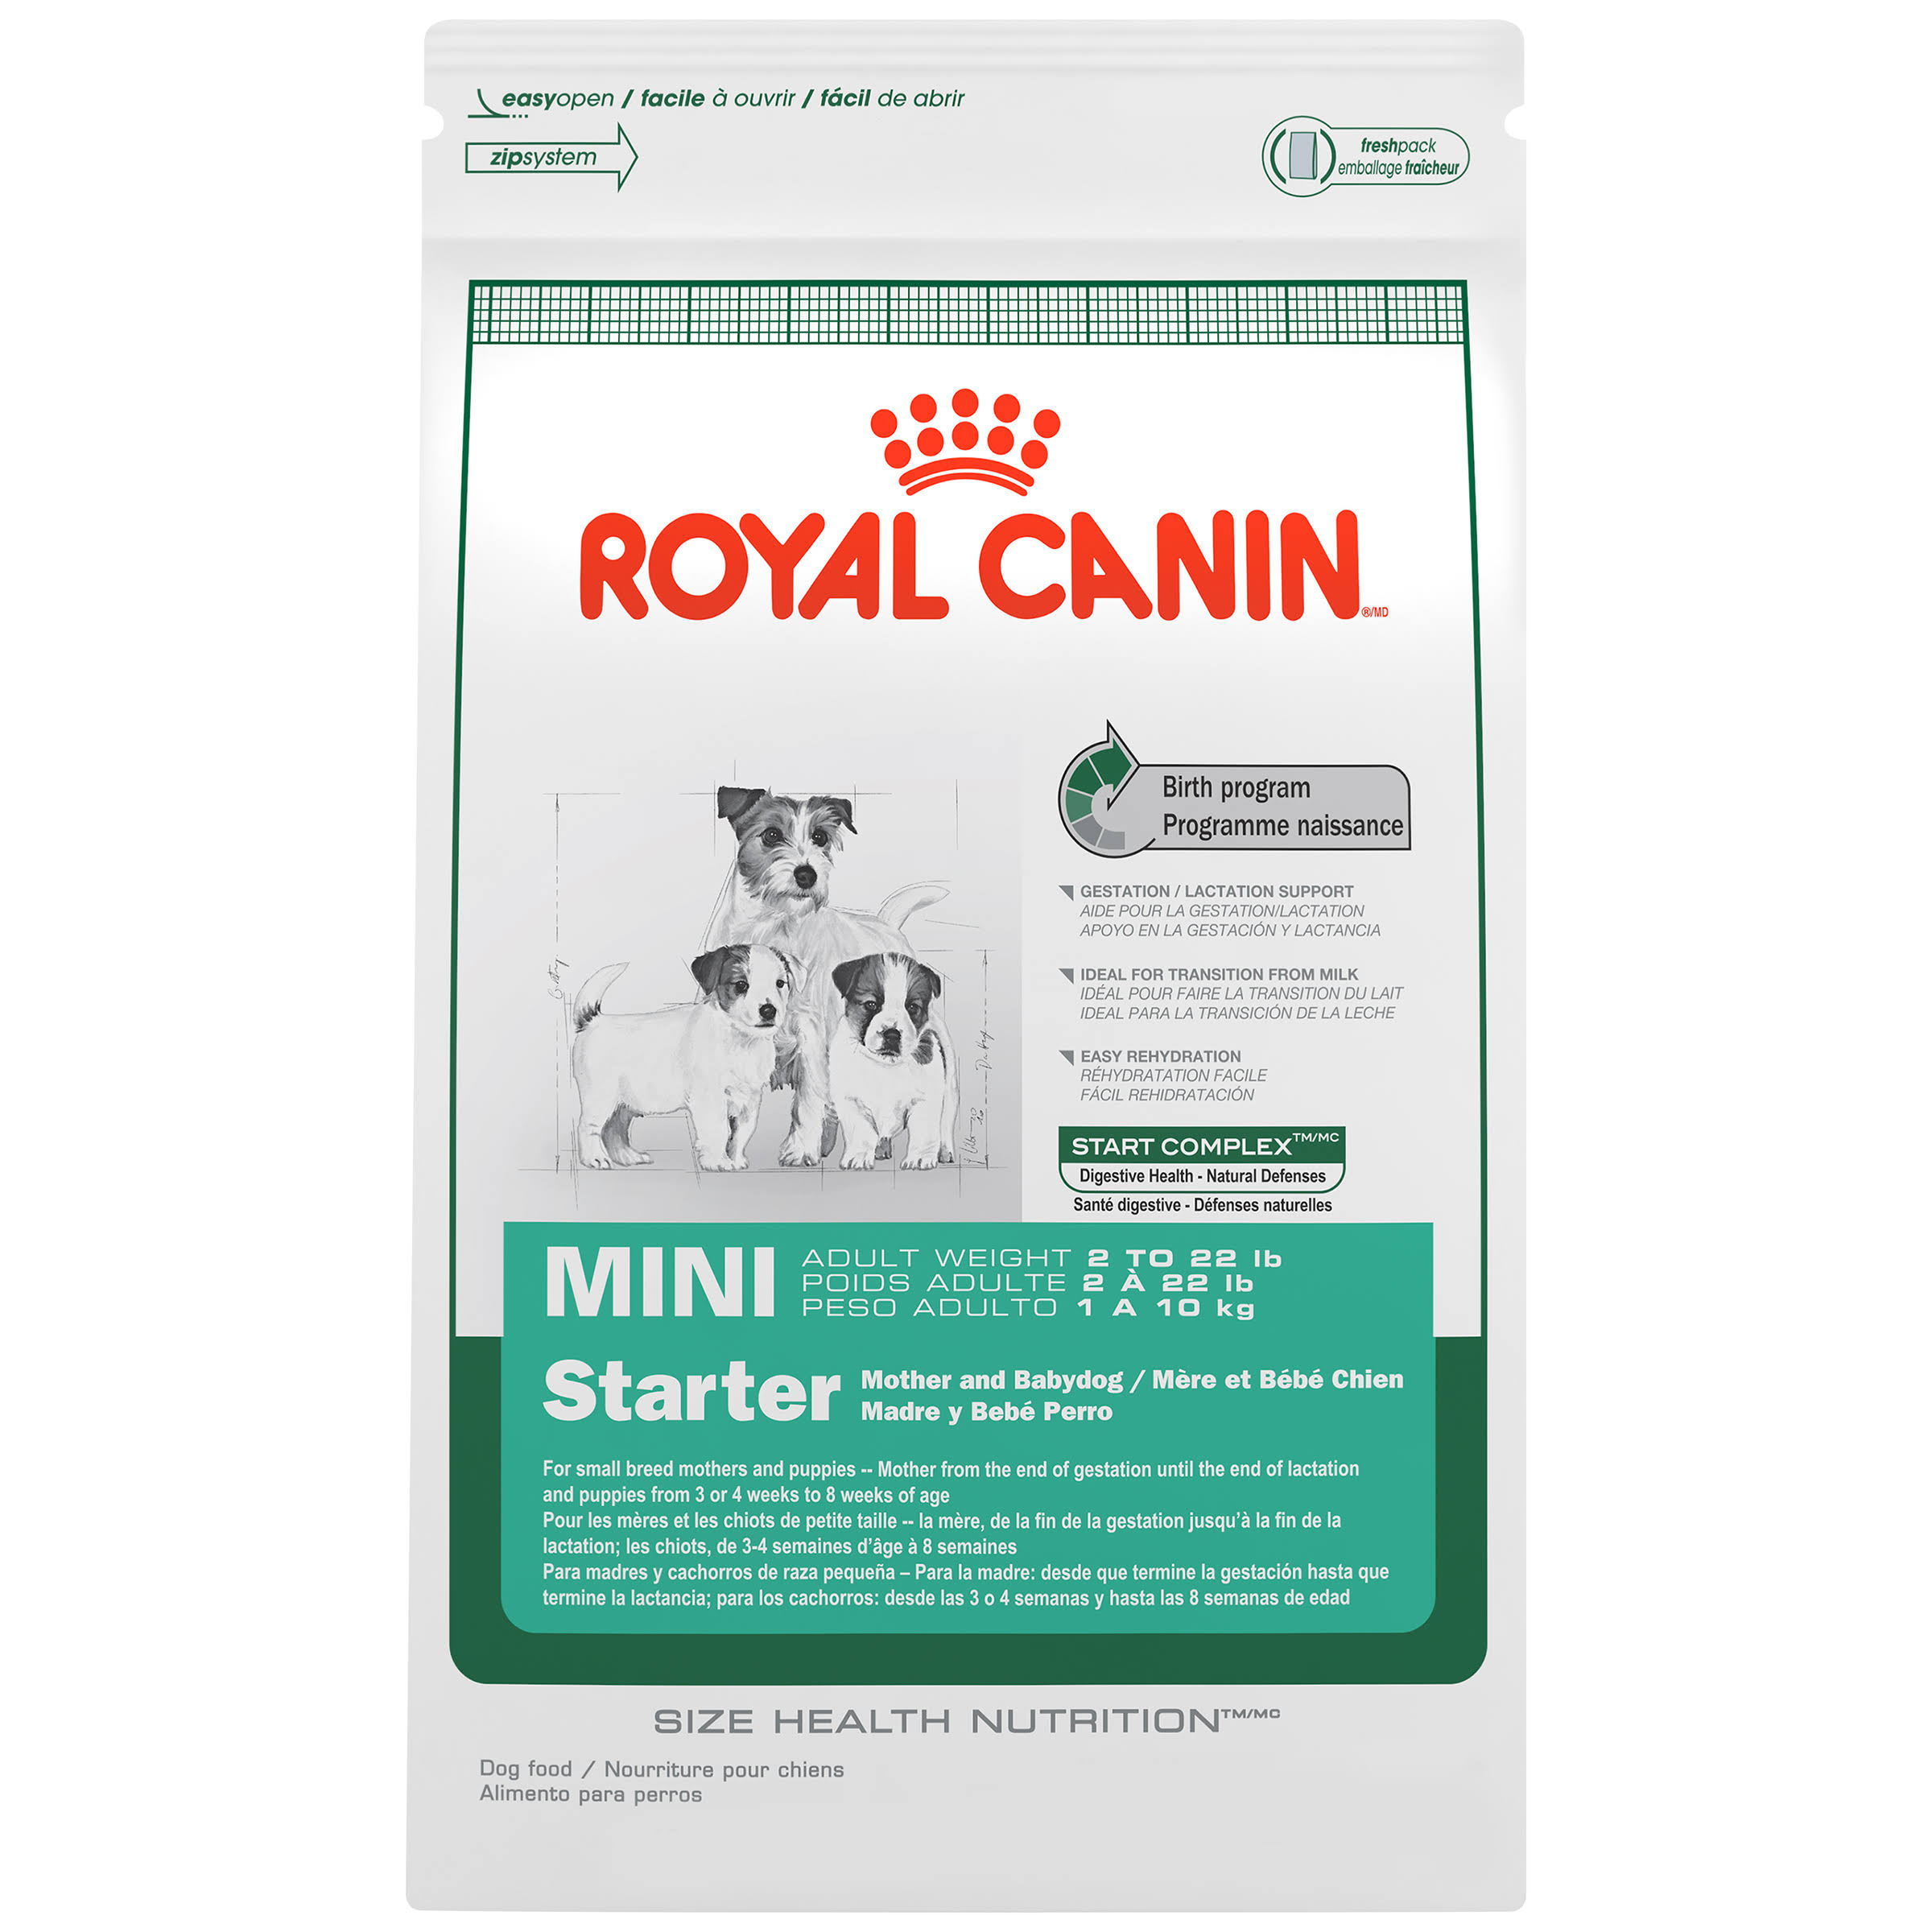 Royal Canin Mini Starter Mother And Babydog Dry Dog Food Formula - 15lbs